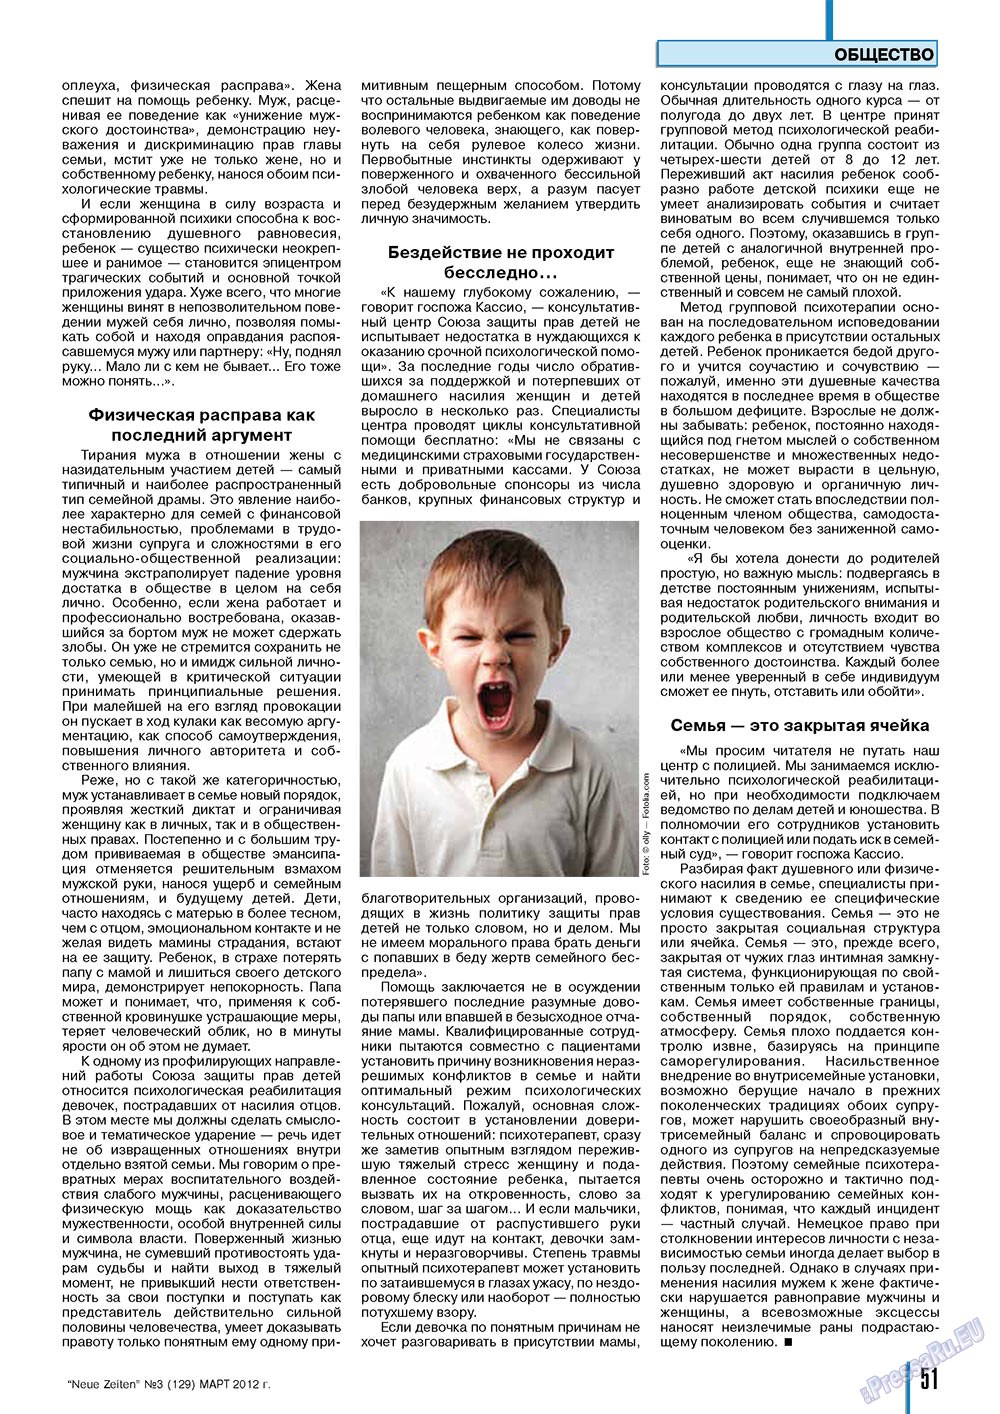 Neue Zeiten (журнал). 2012 год, номер 3, стр. 51